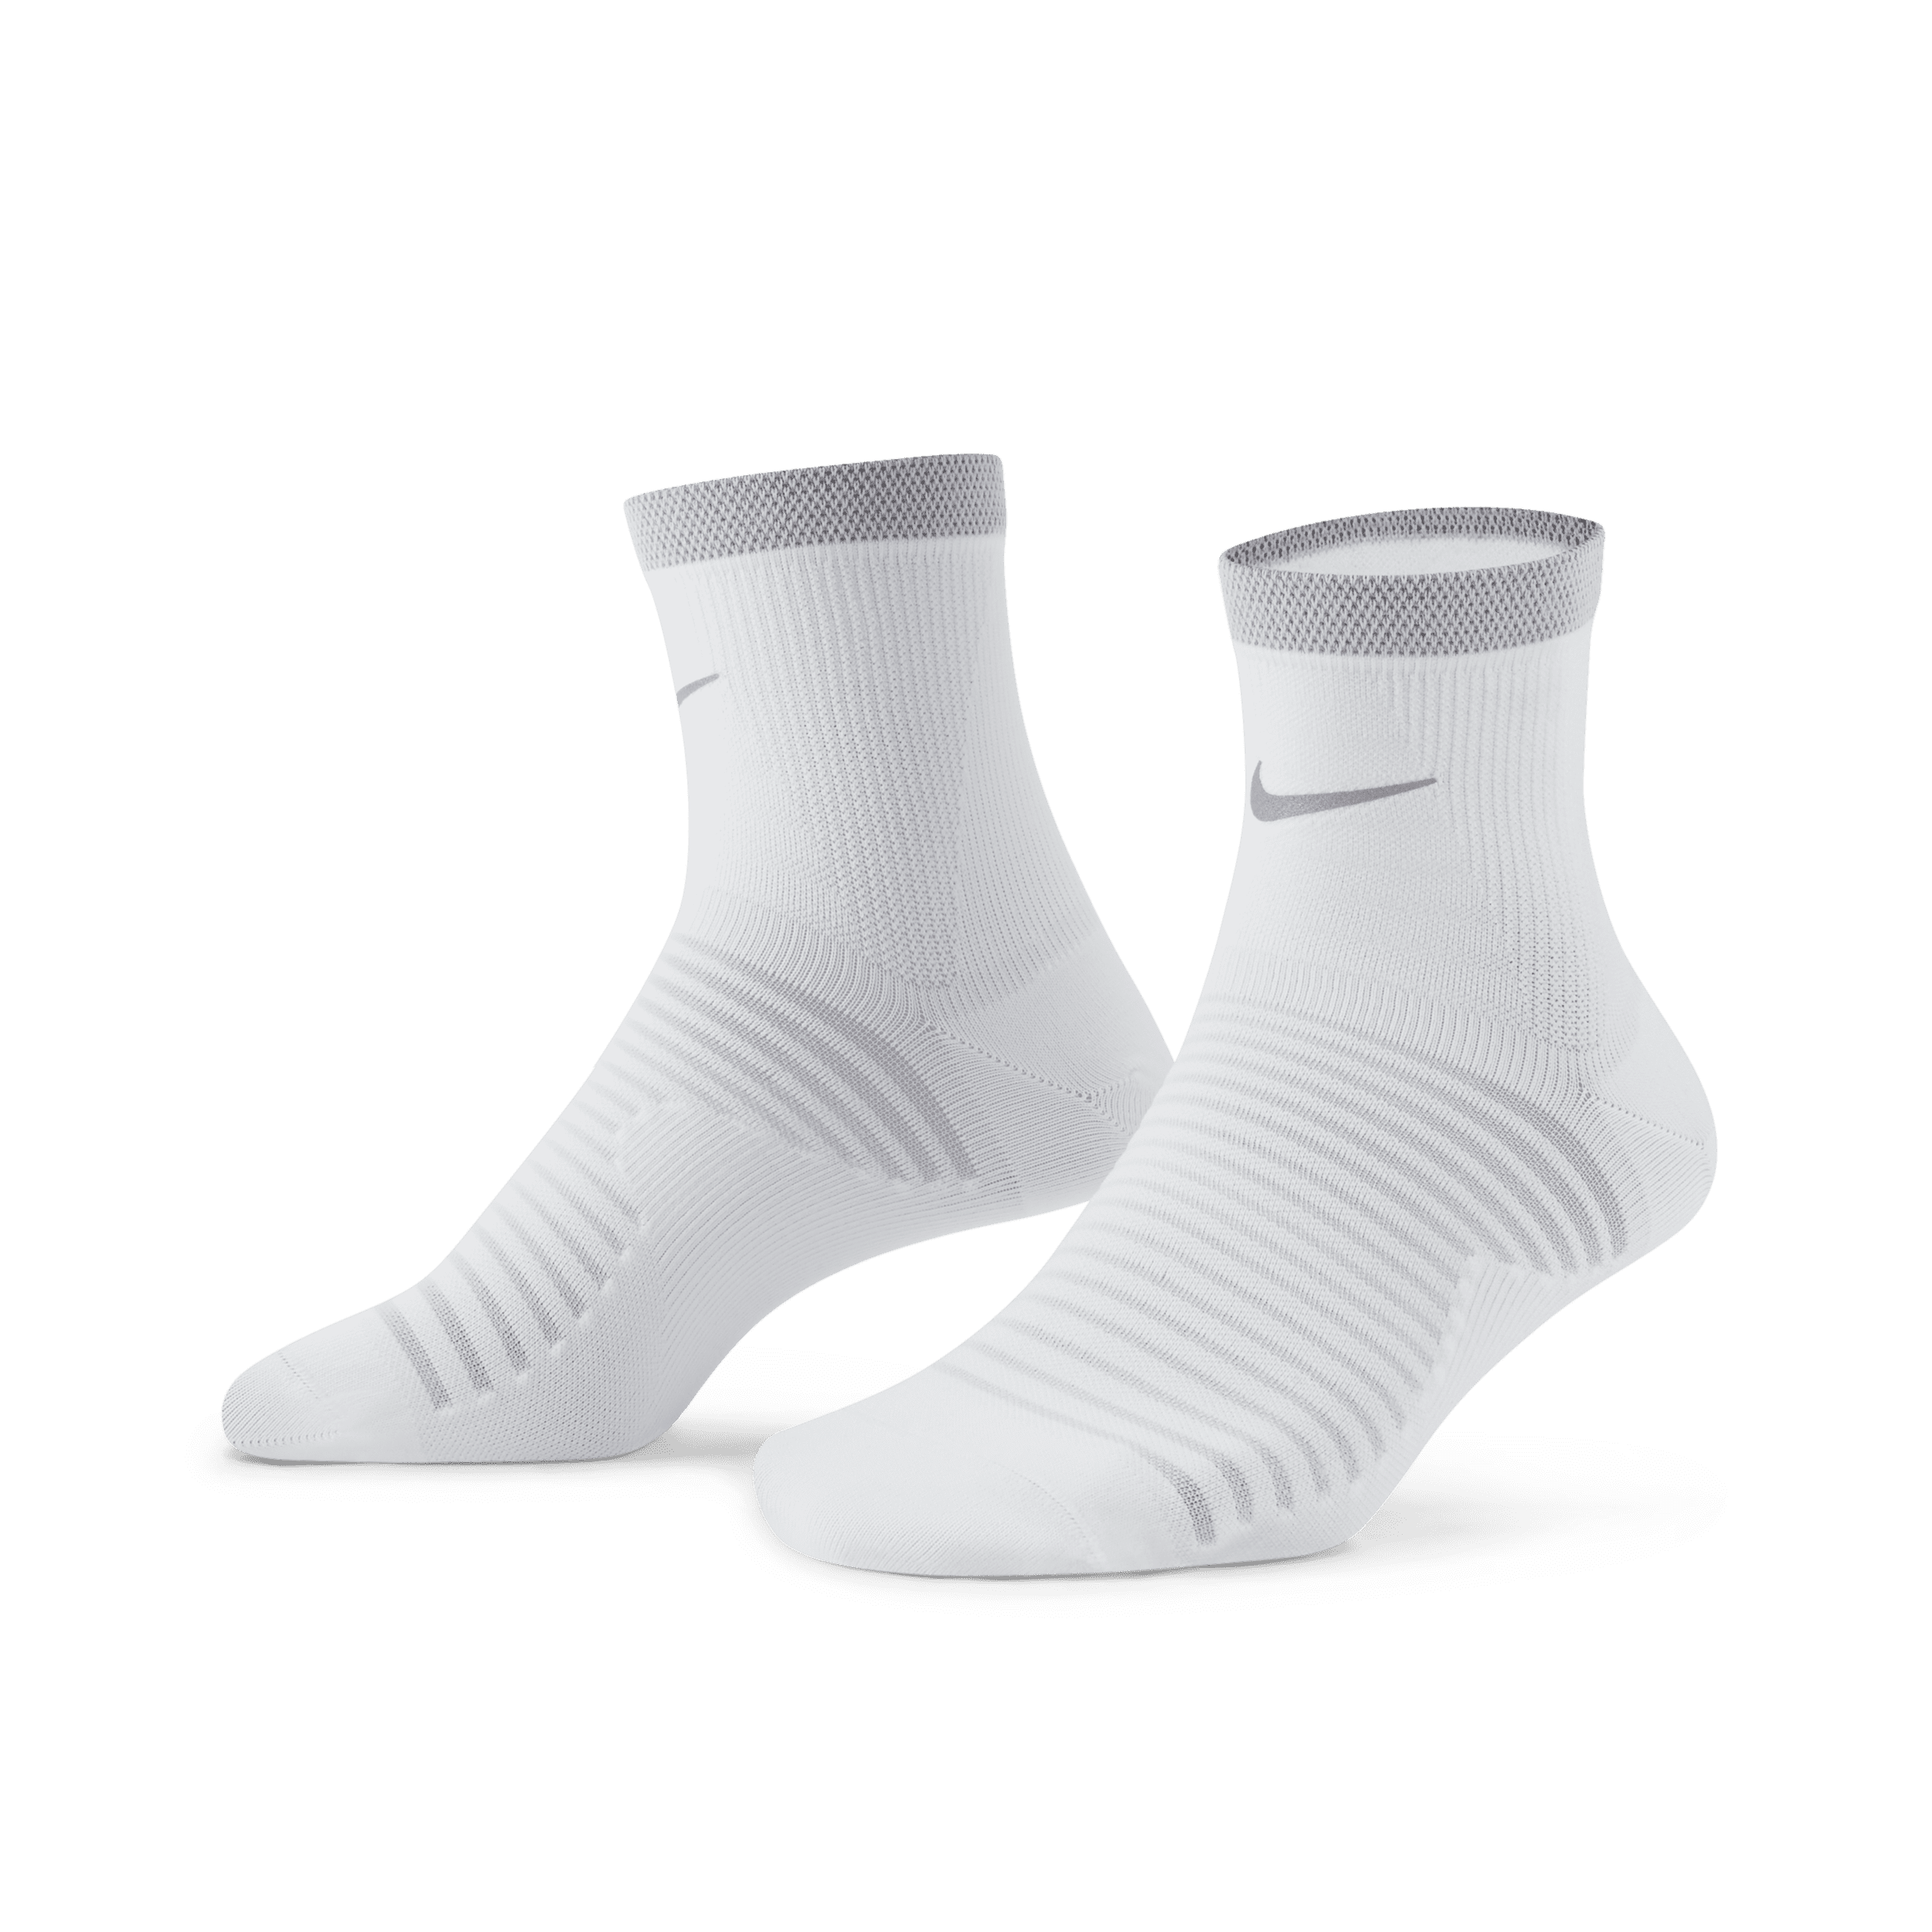 Nike Spark Lightweight Calcetines hasta el tobillo de running - Blanco